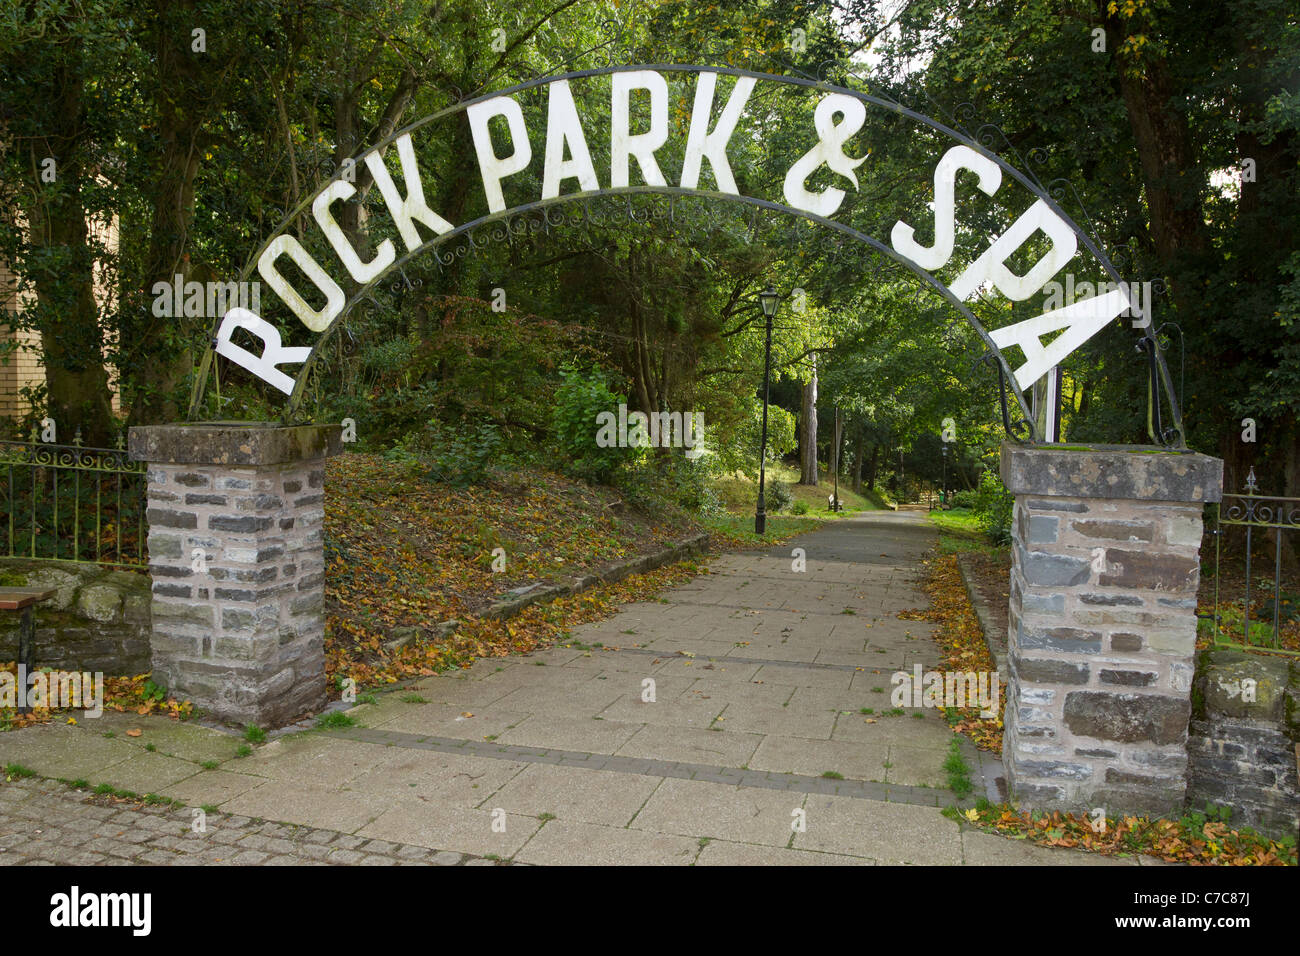 Rock Park & Spa unterzeichnen am Rock Park Eingang, Llandrindod Wells, Wales UK. Stockfoto